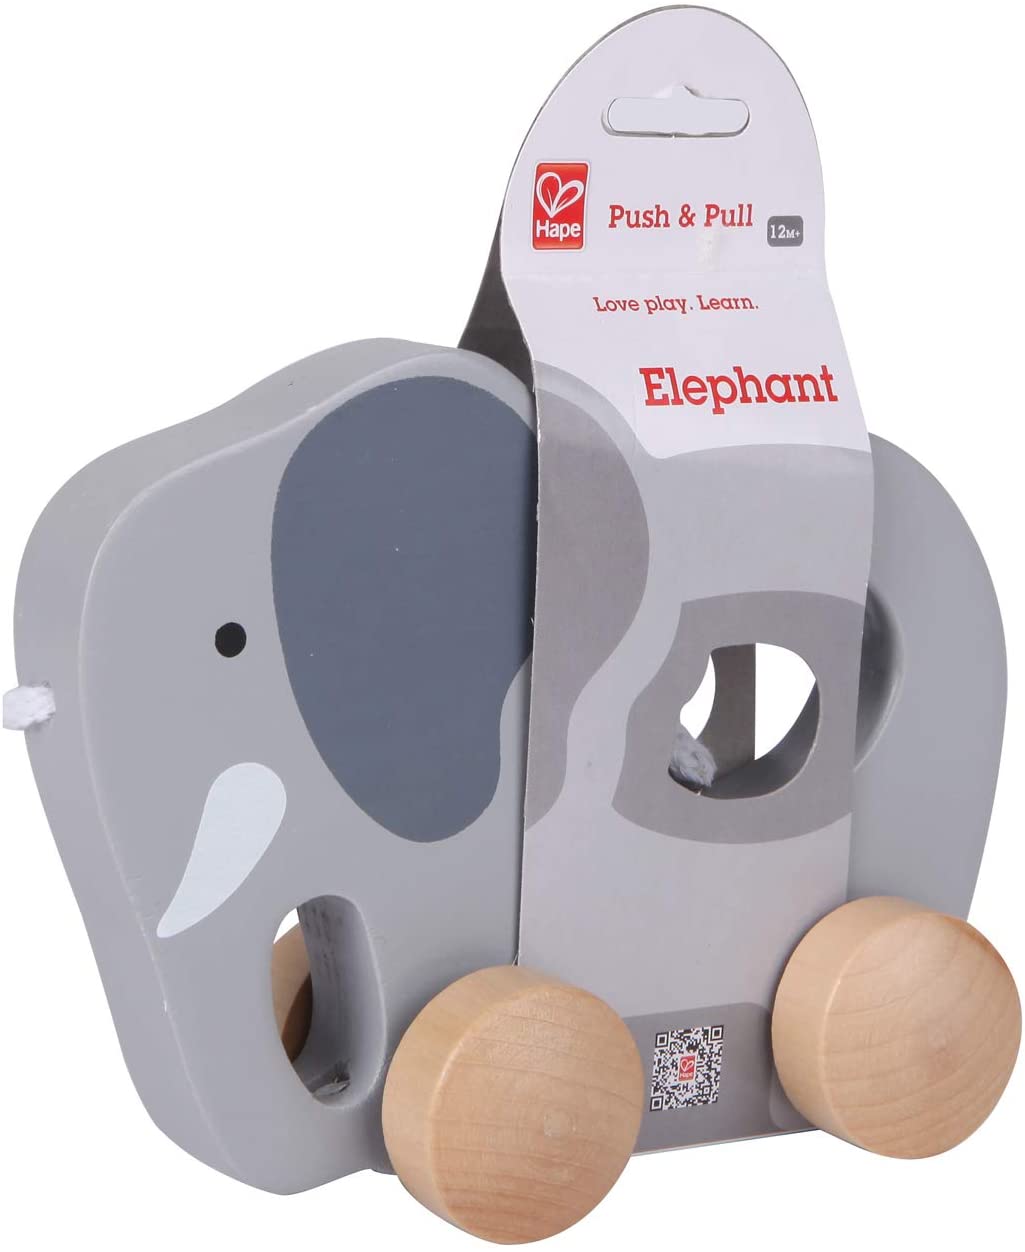 (Elephant) - Hape Elephant Wooden Push and Pull Toddler Toy,Grey - image 5 of 6